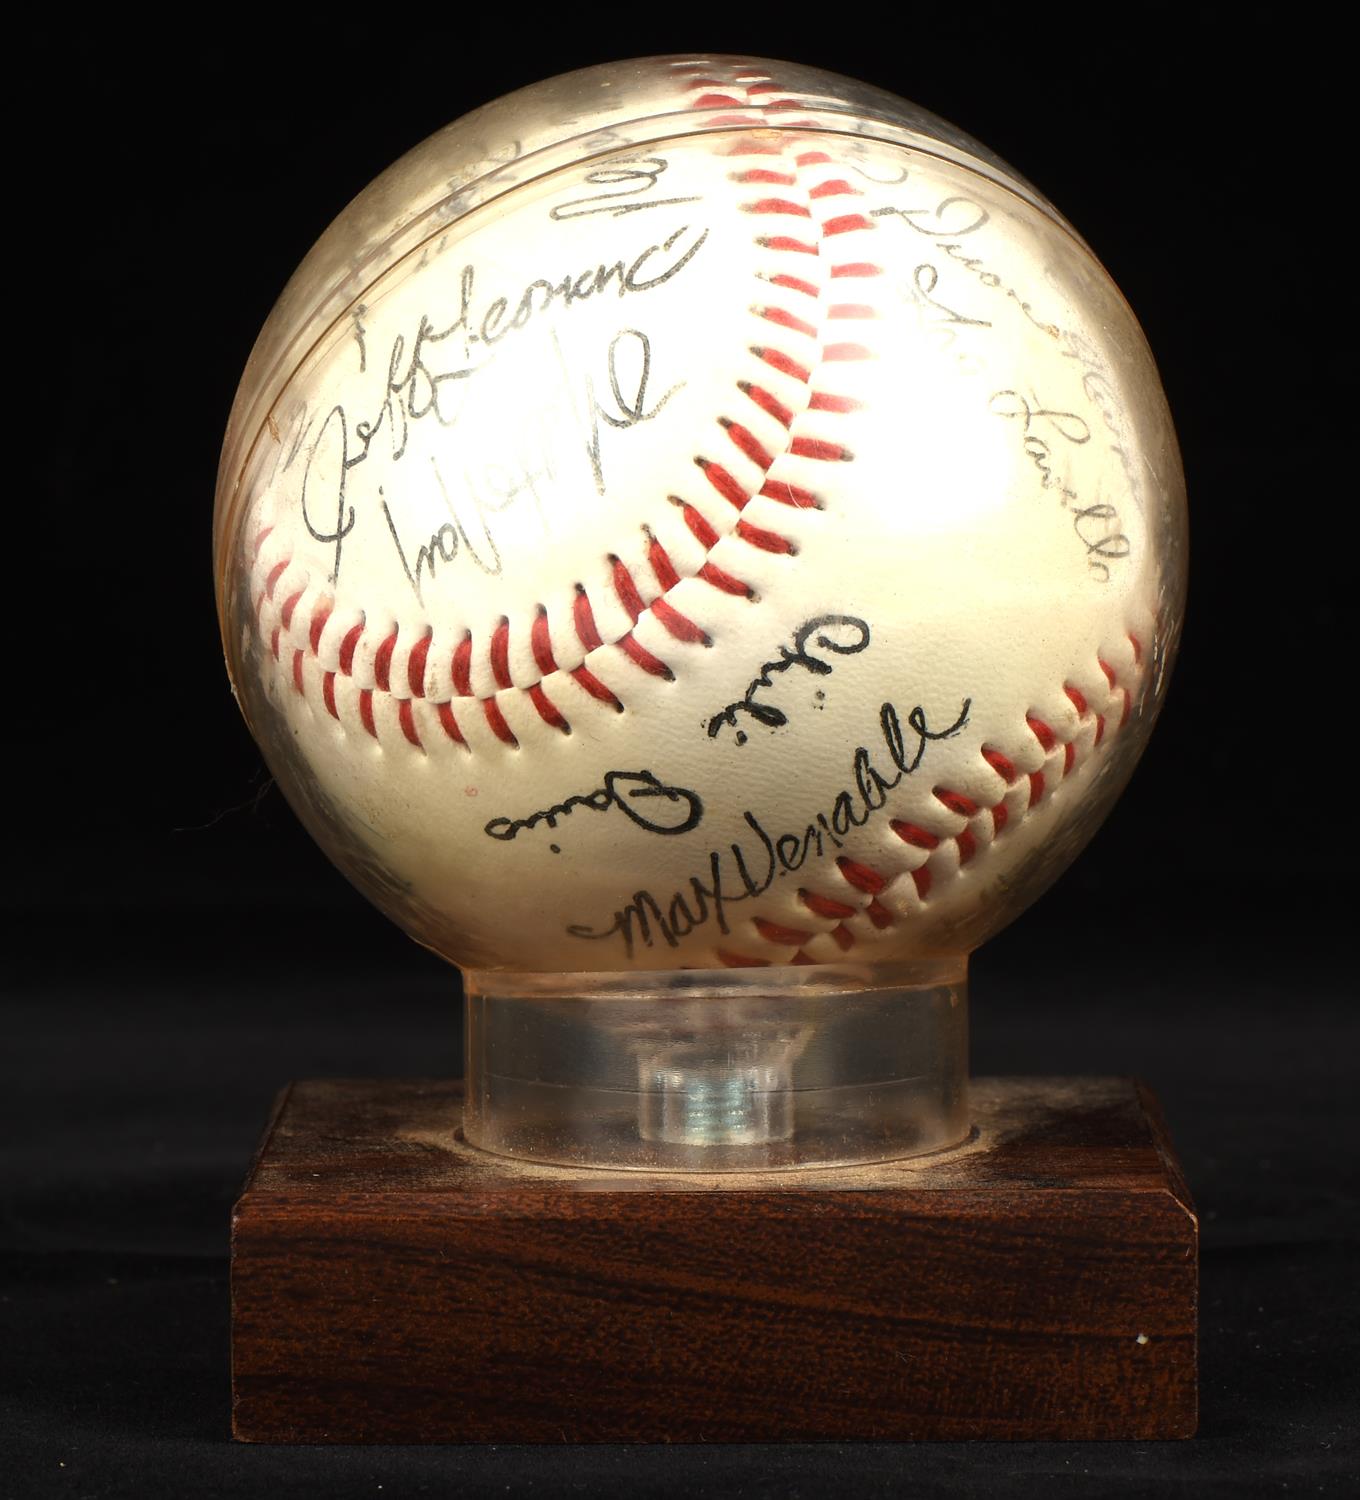 Baseball - various signatures / autographs, including Jack Clark, Mark Davis, Bill Jacky and many